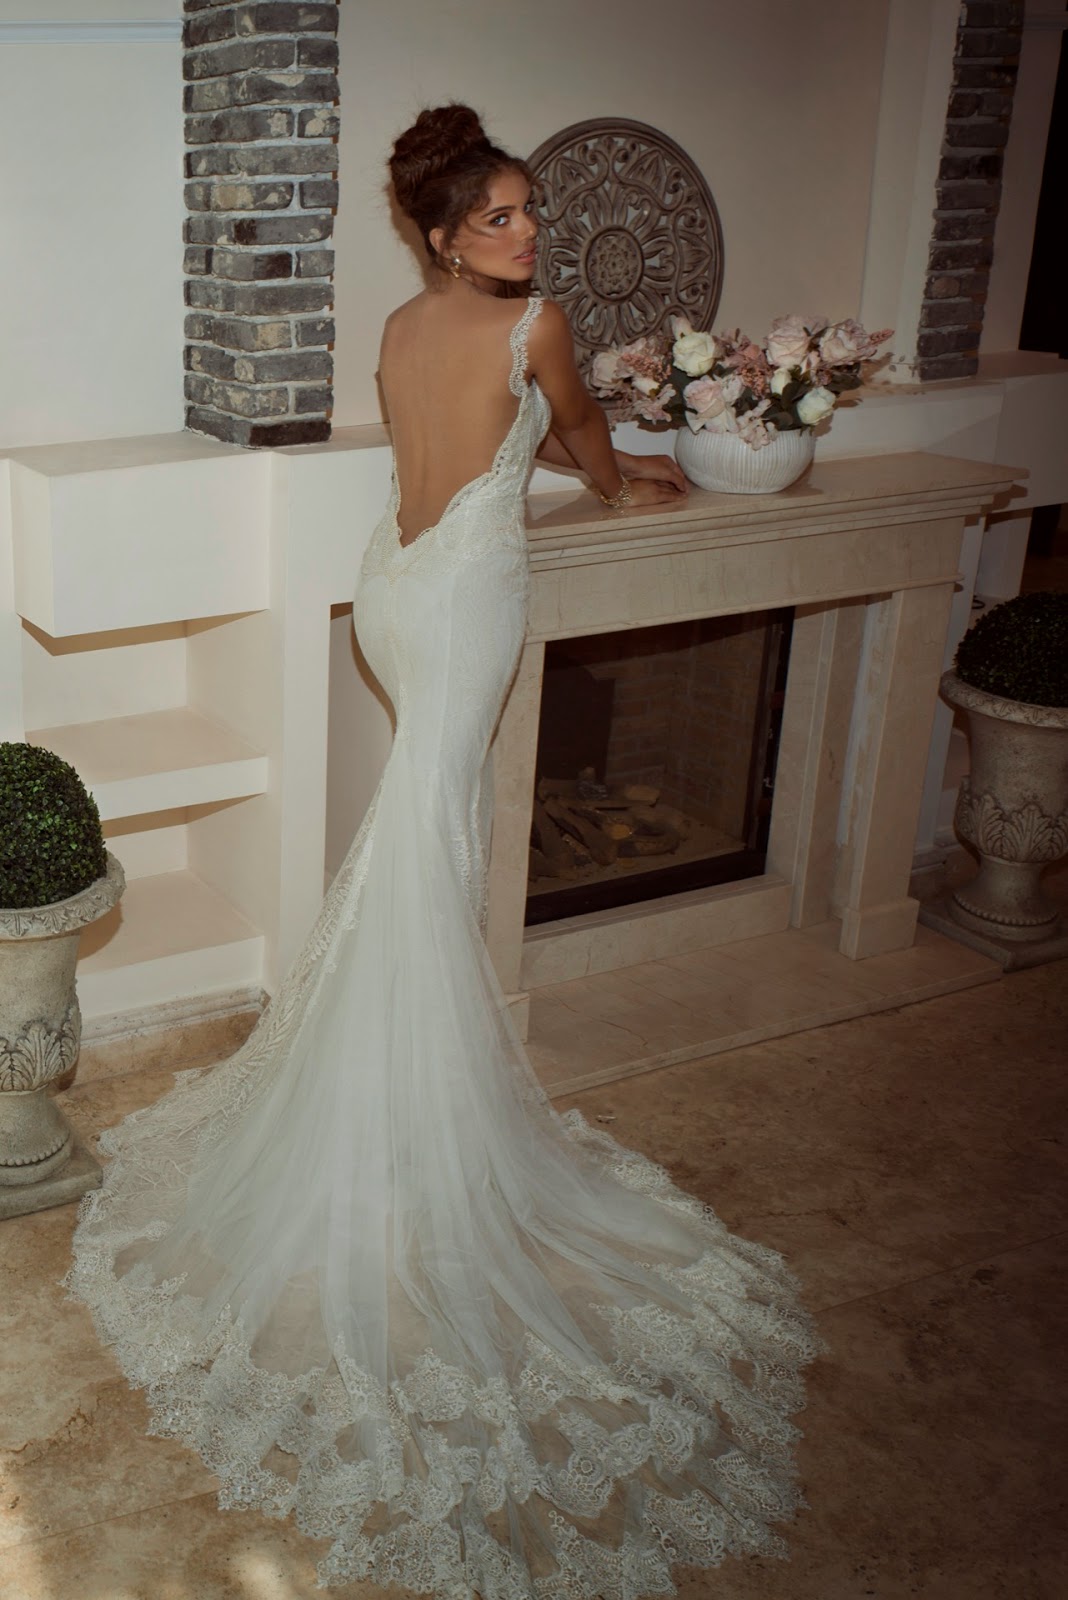 AMORE (Beauty + Fashion): WEDDING BELL WEDNESDAY - Galia Lahav ‘The ...